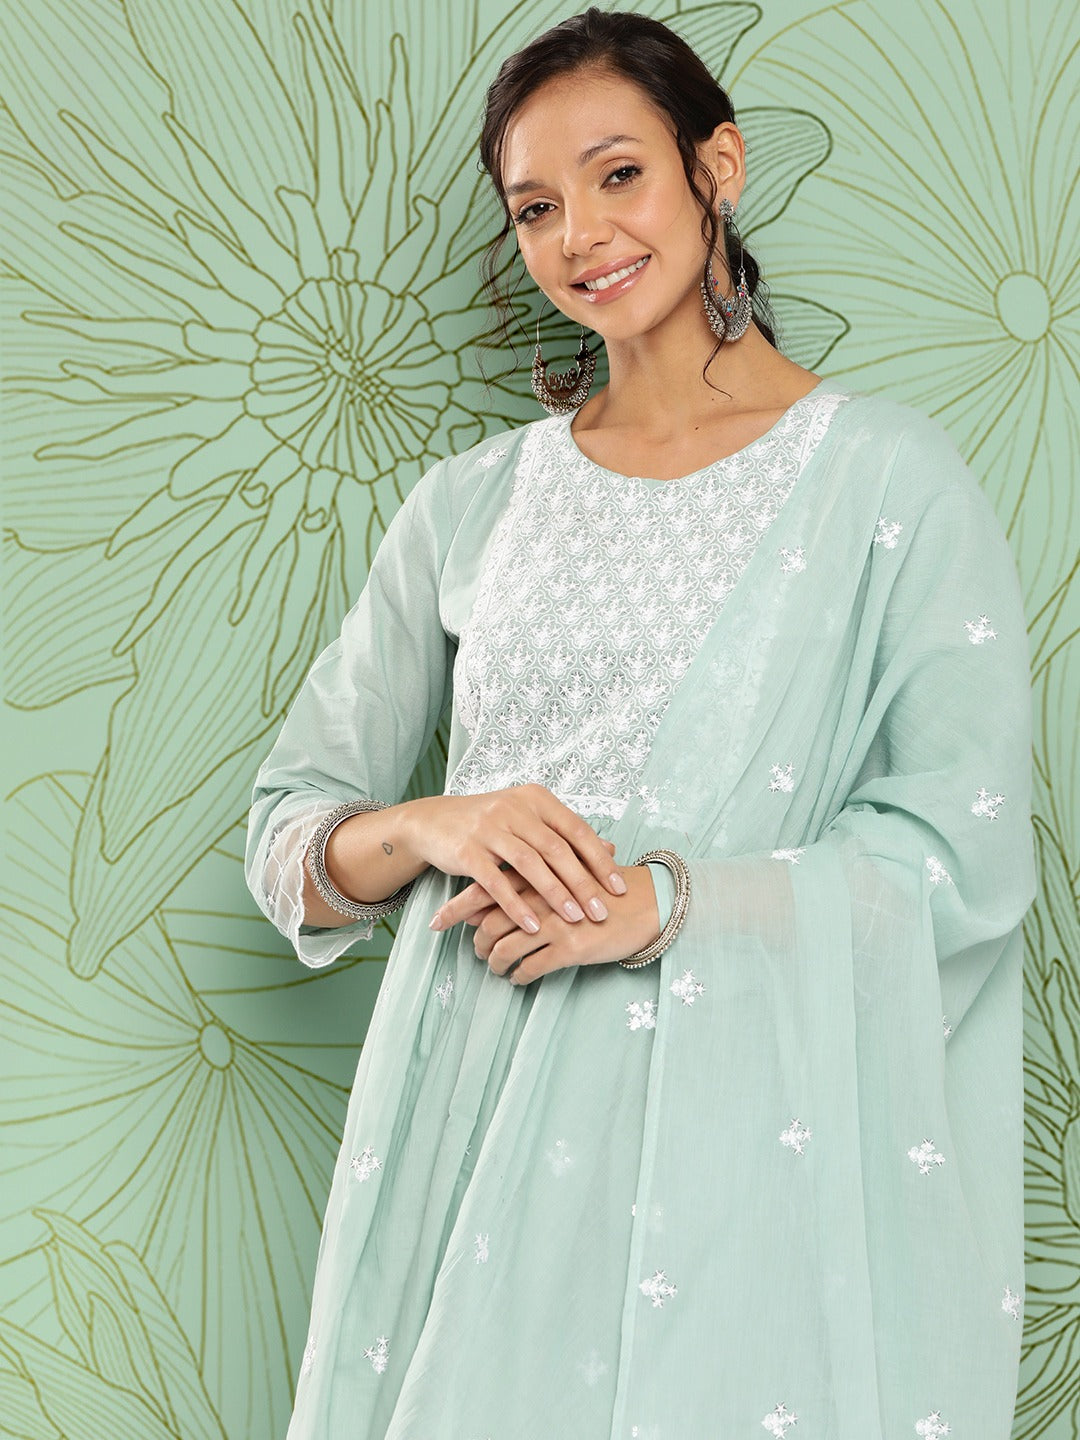 Sea Green Floral Embroidered Cotton Kurta With Dupatta Set-Yufta Store-1256SKDSGS